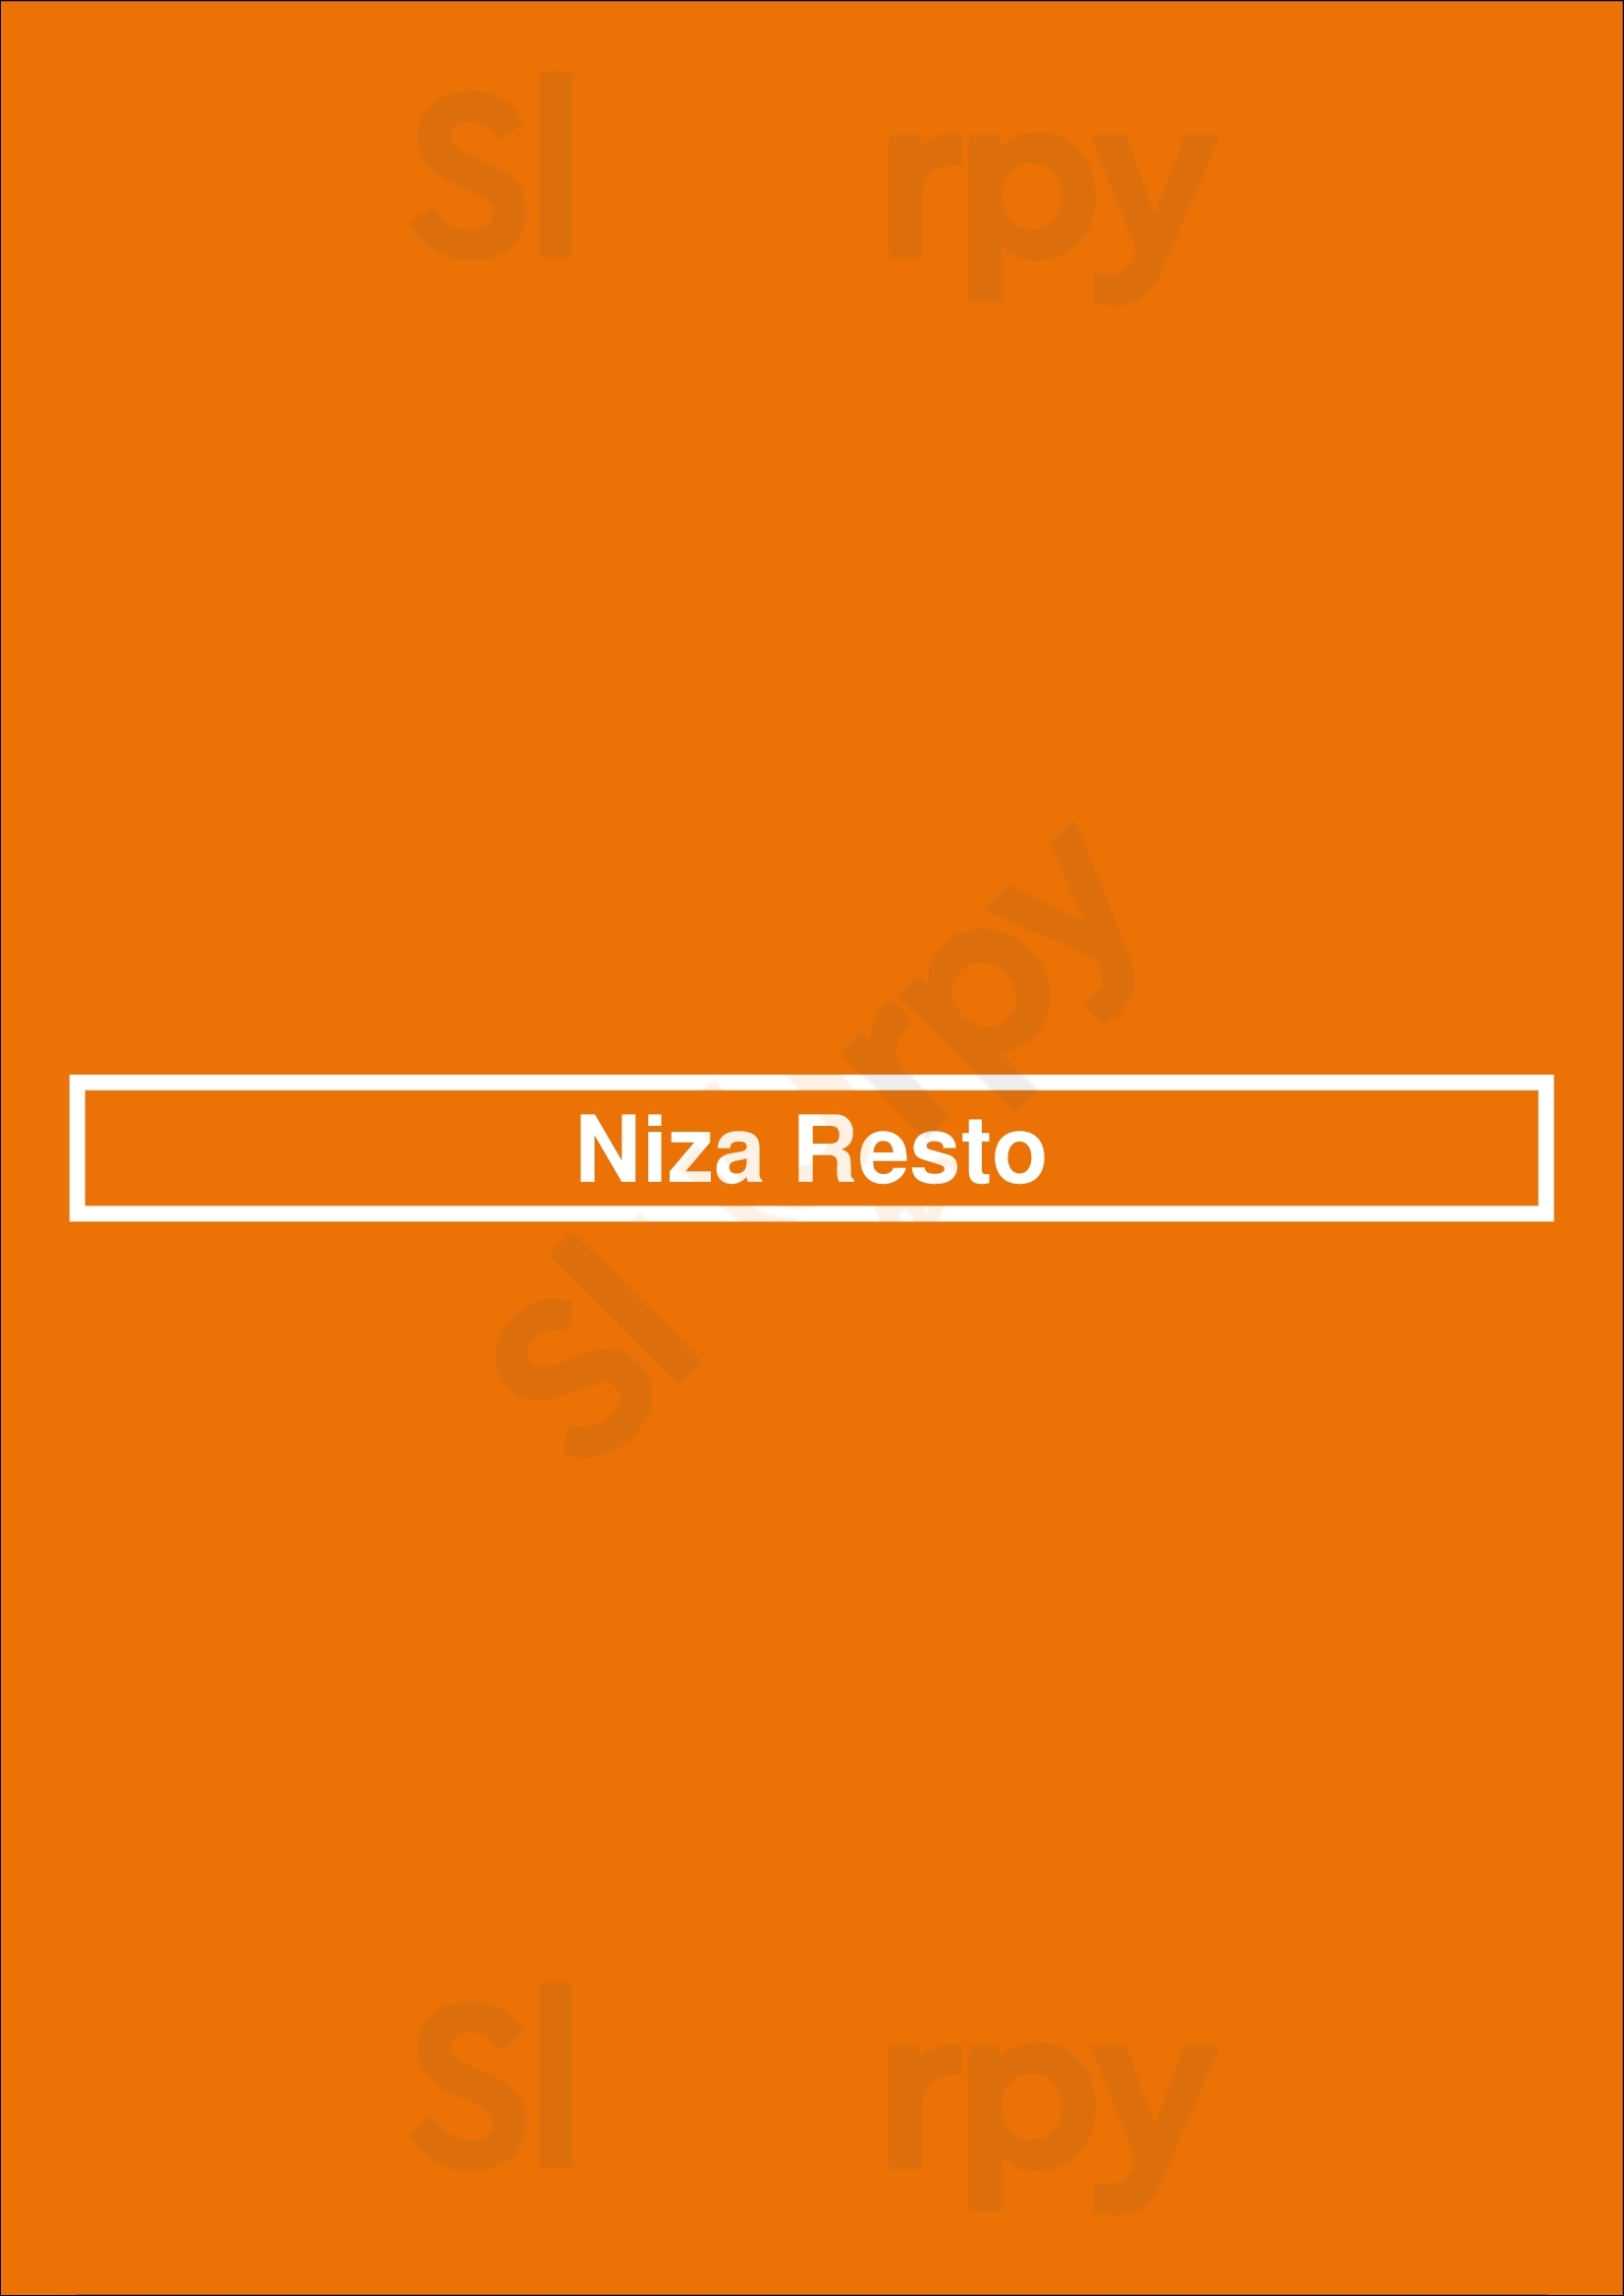 Niza Resto Martínez Menu - 1